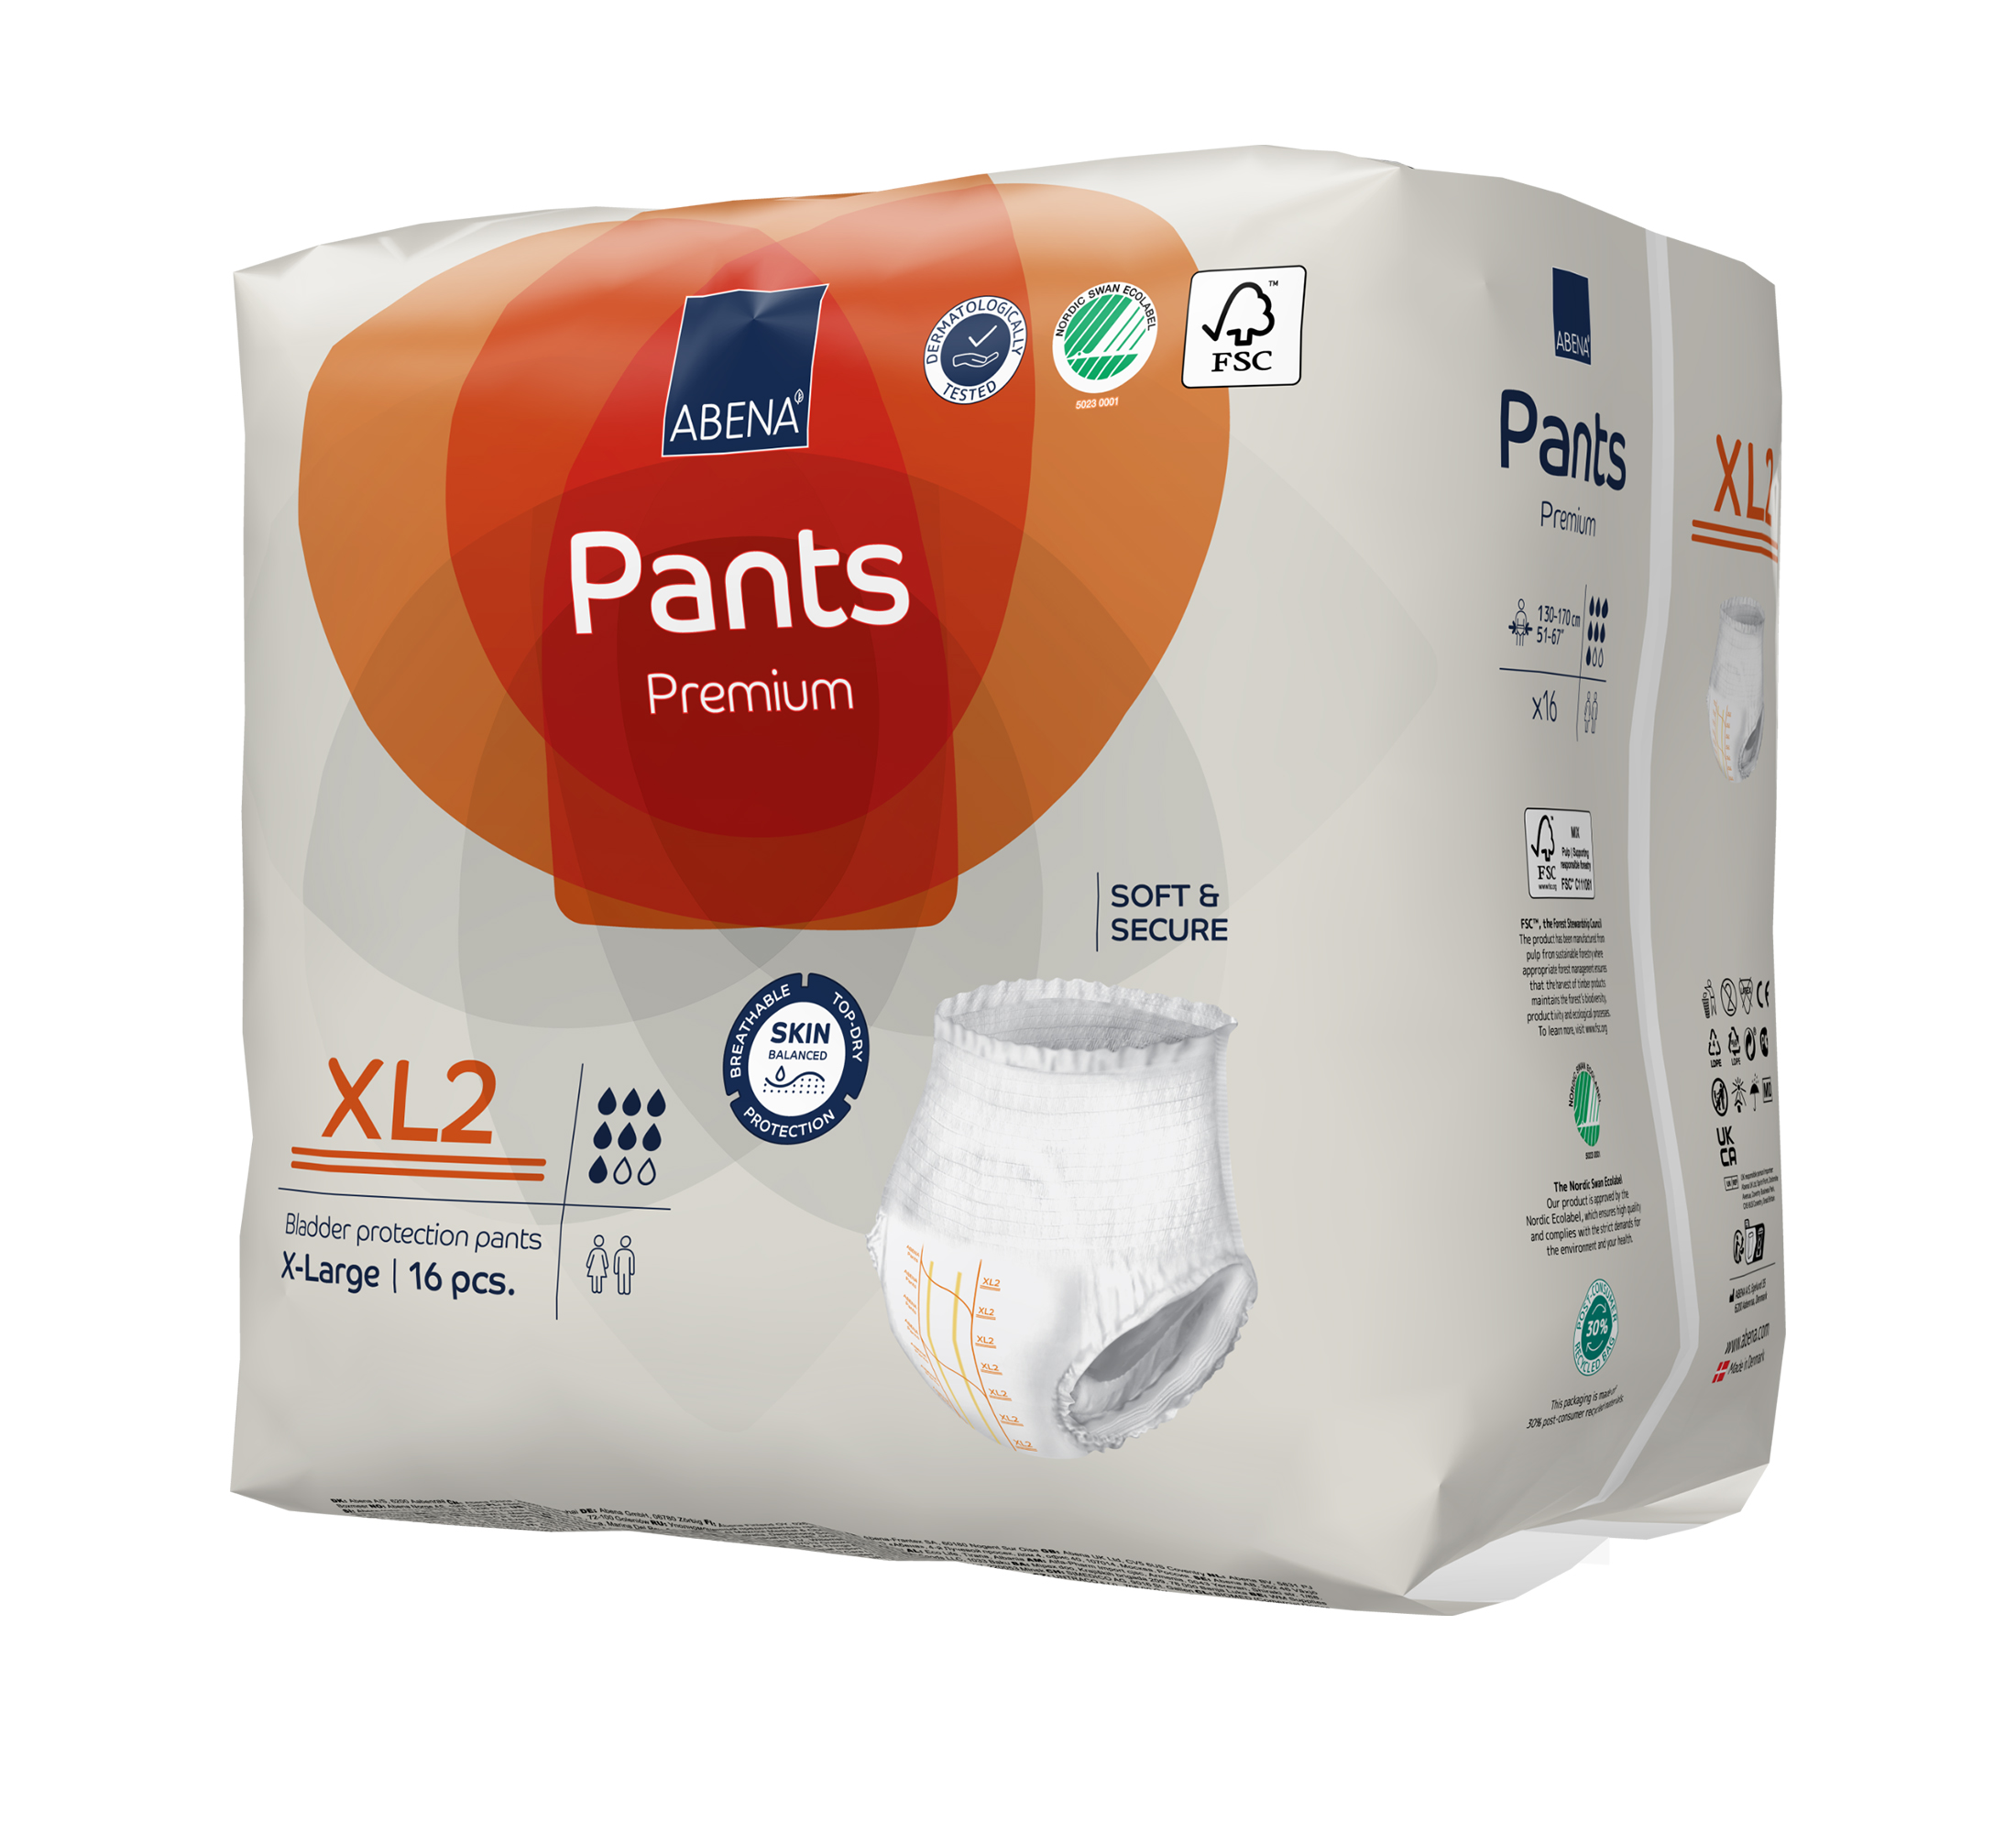 ABENA Pants Premium Einweghosen, XL2, Größe XL, 16 Stk.